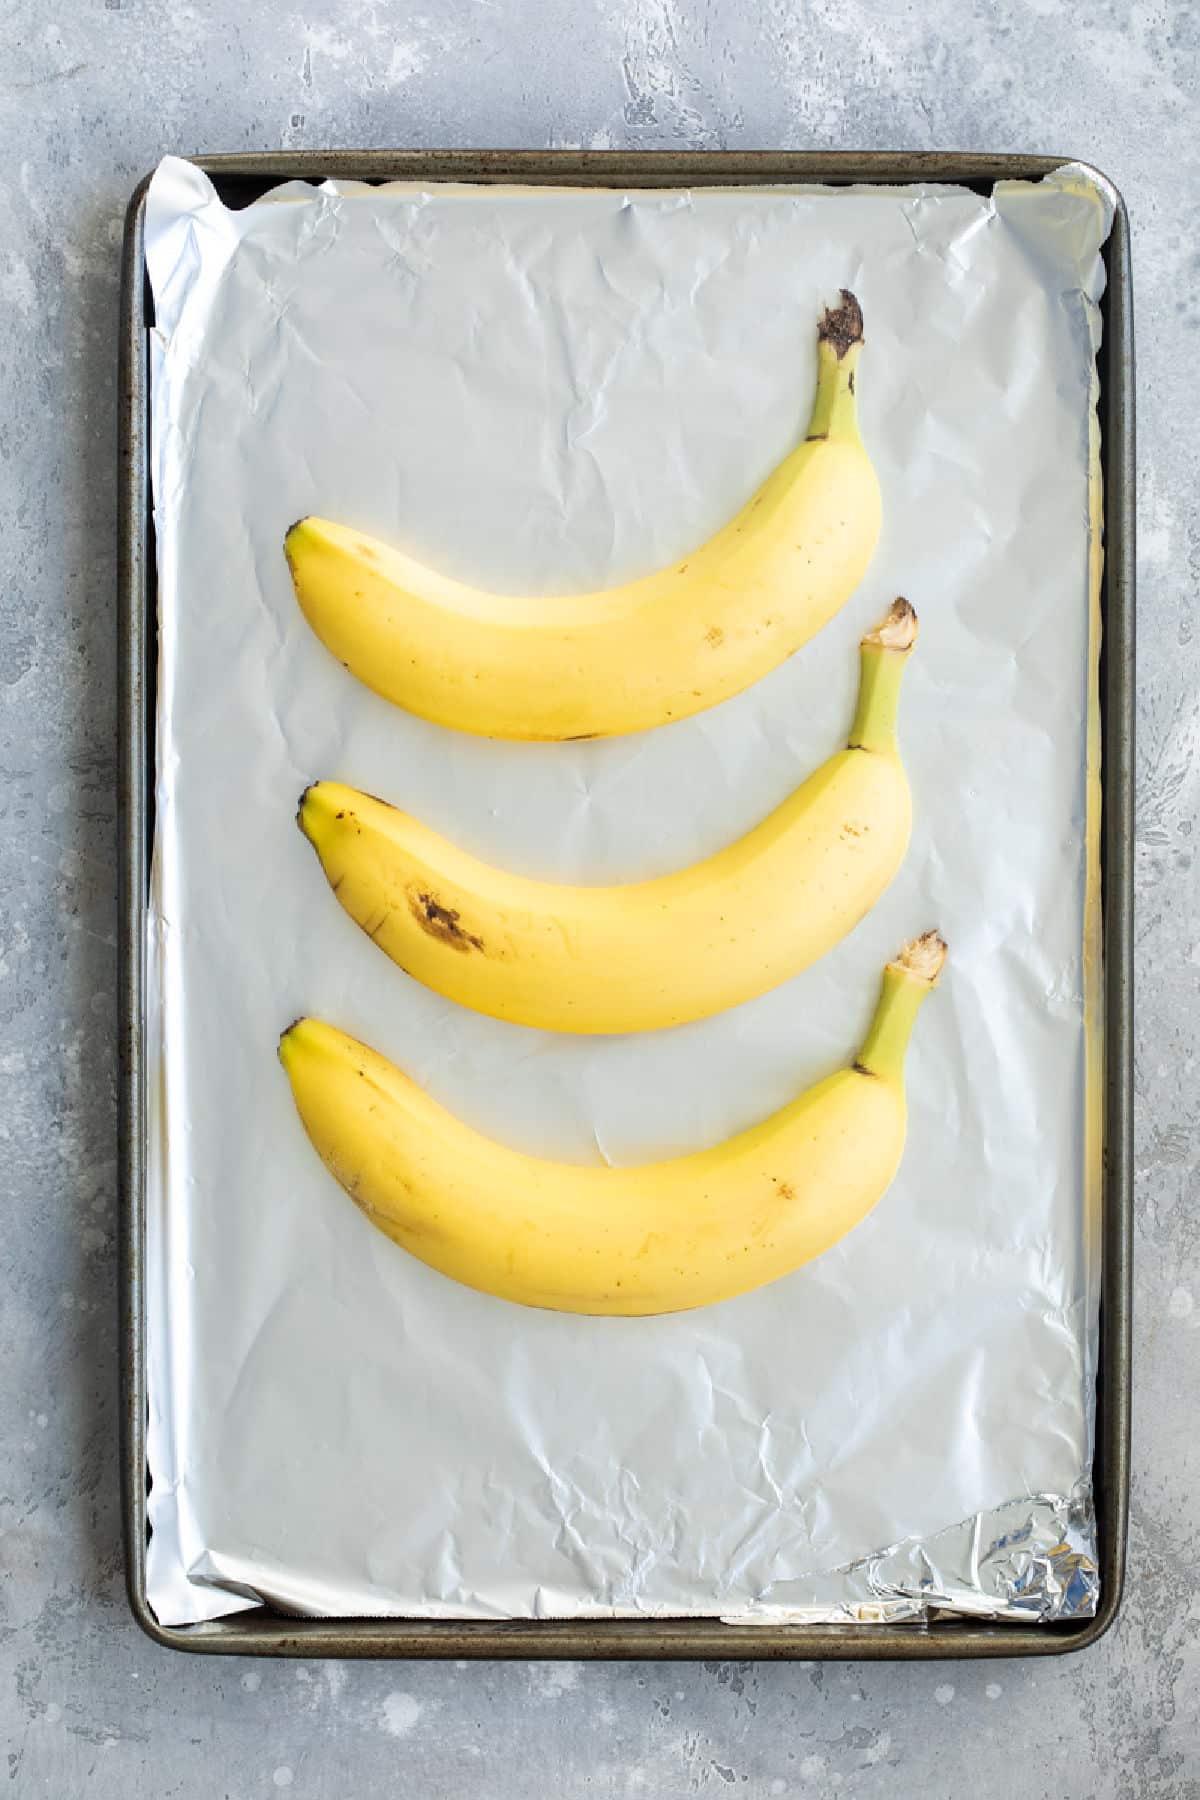 3 yellow bananas on a baking sheet.